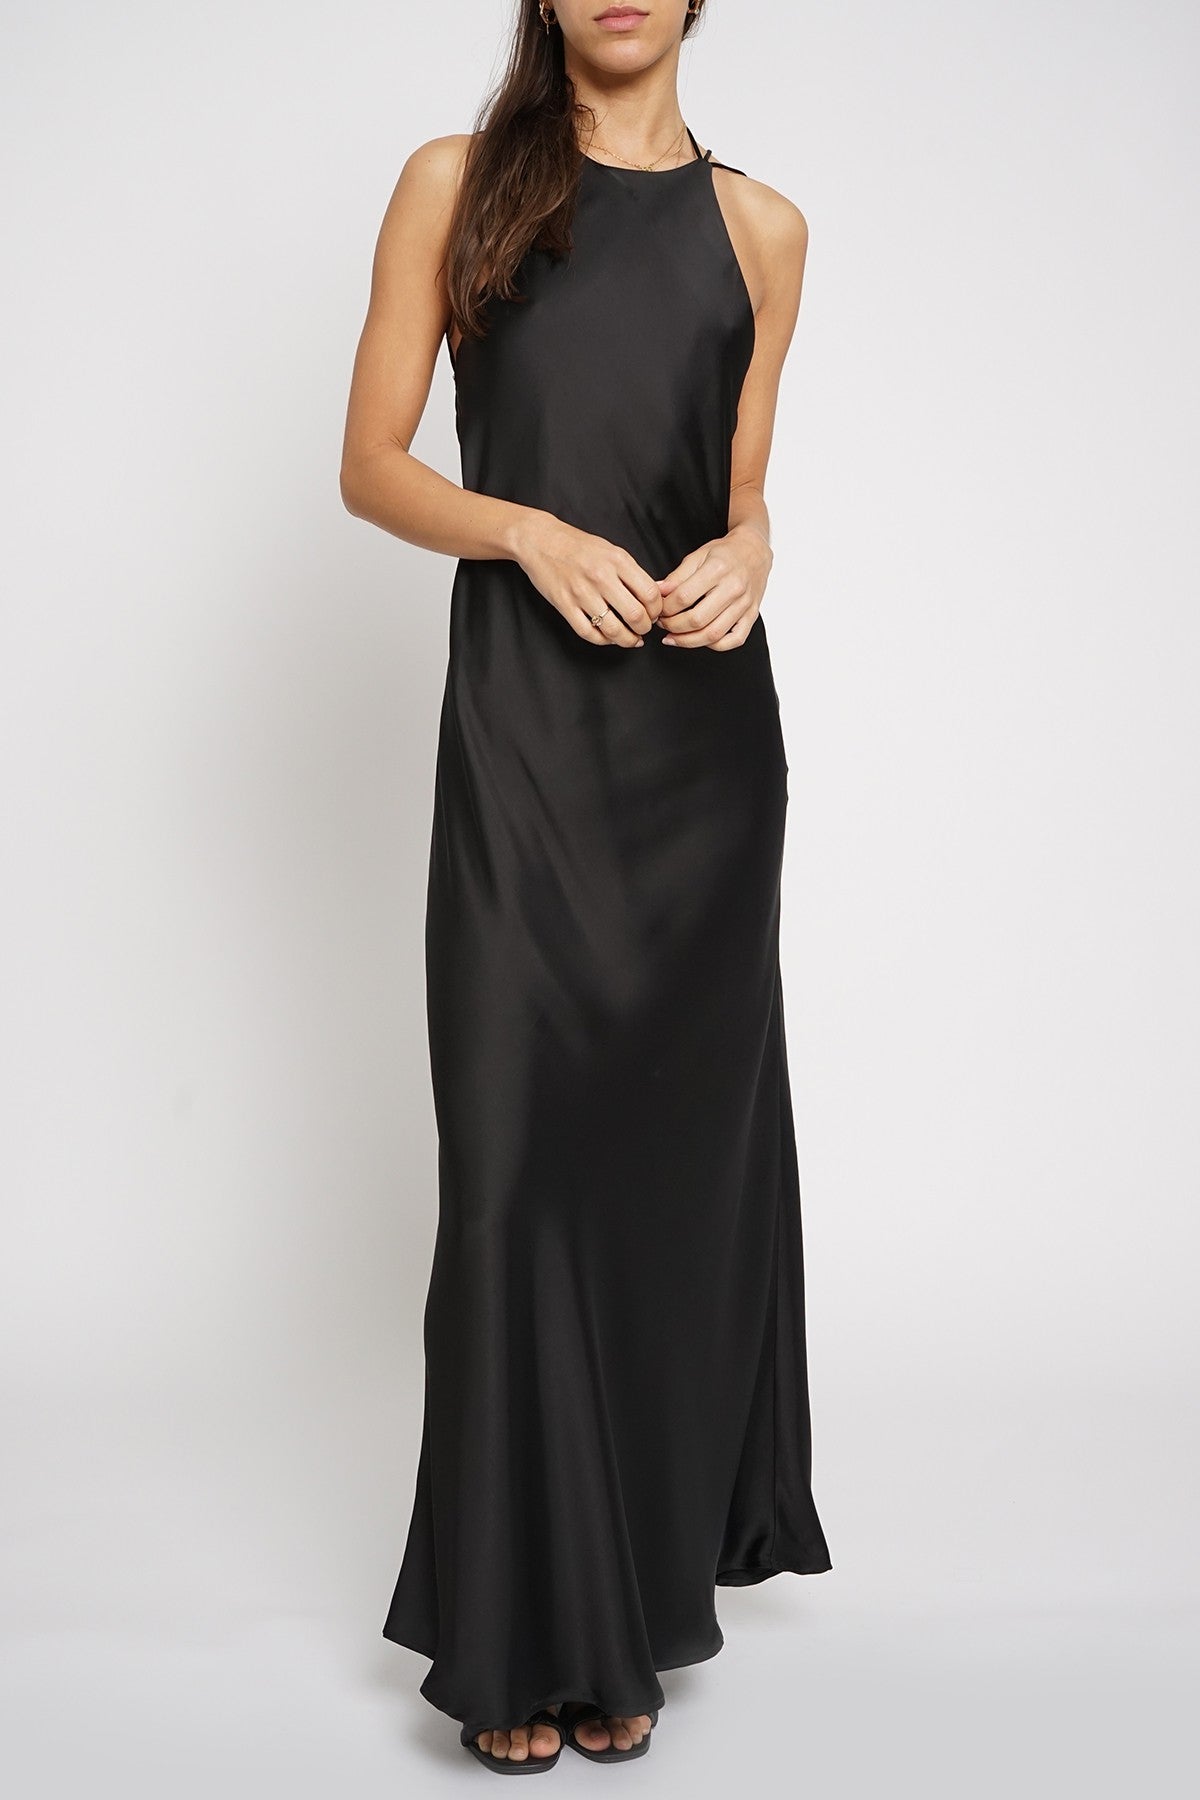 Tamara - negro - Cindel vestidos maxi, midi, mini, para toda ocasion, largos, de fiesta, de boda